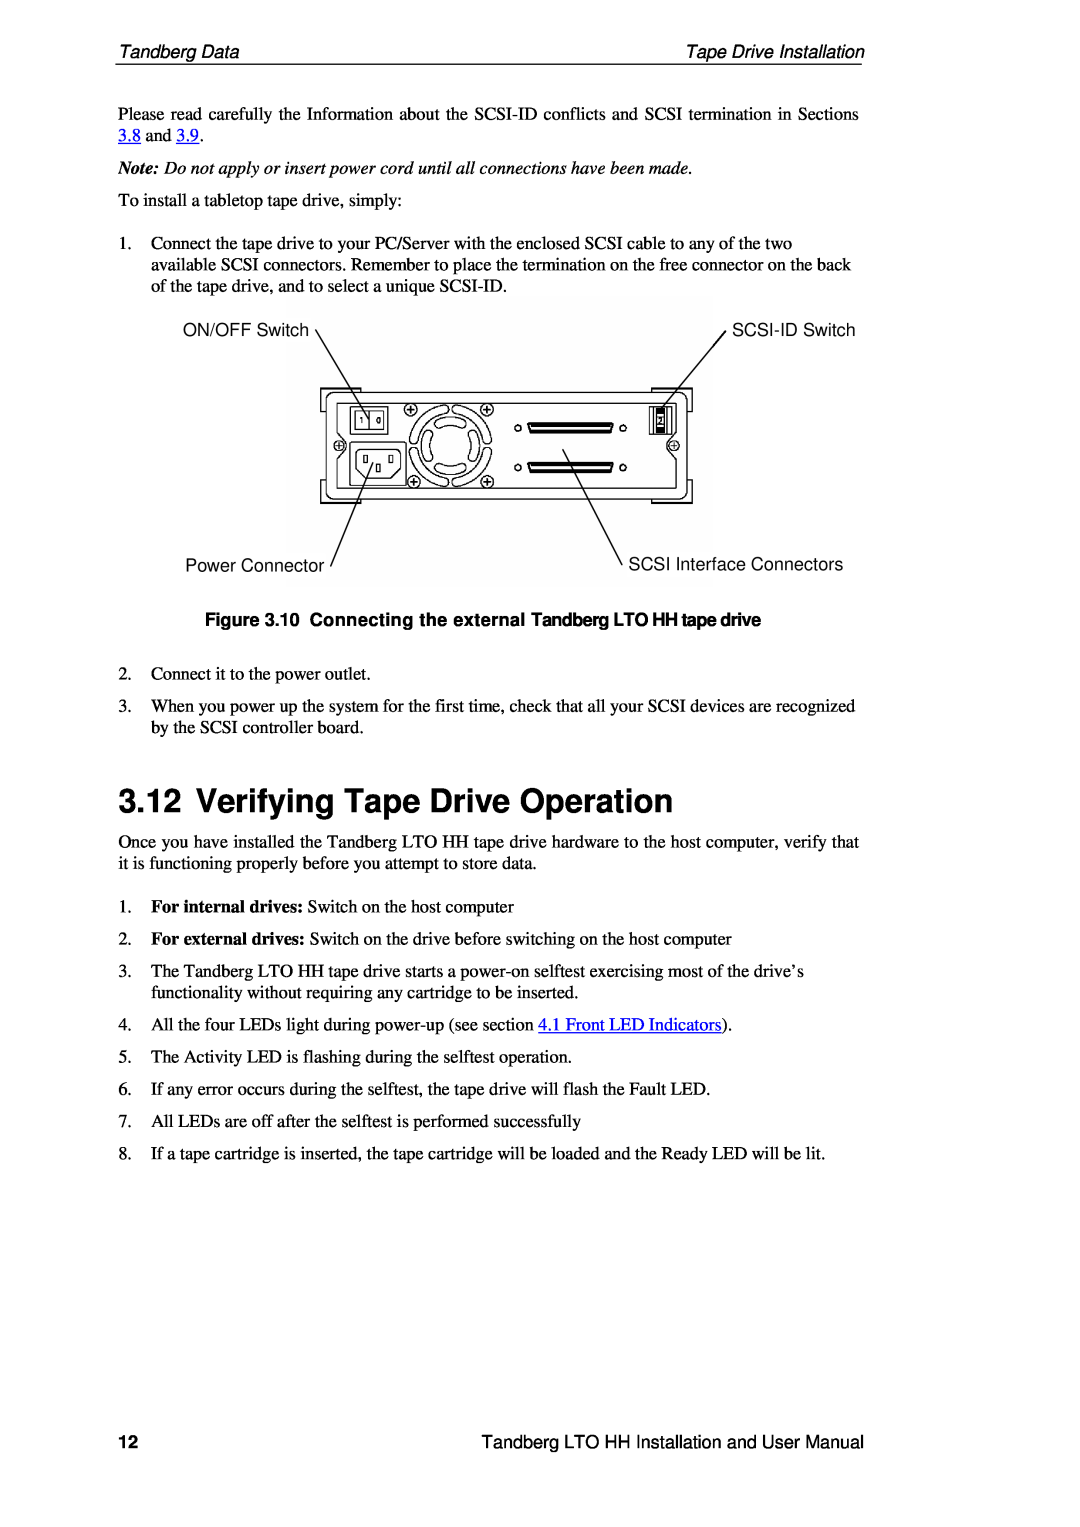 Tandberg Data LTO-2 HH, LTO-3 HH, LTO-1 HH user manual Verifying Tape Drive Operation, Tandberg Data, Tape Drive Installation 